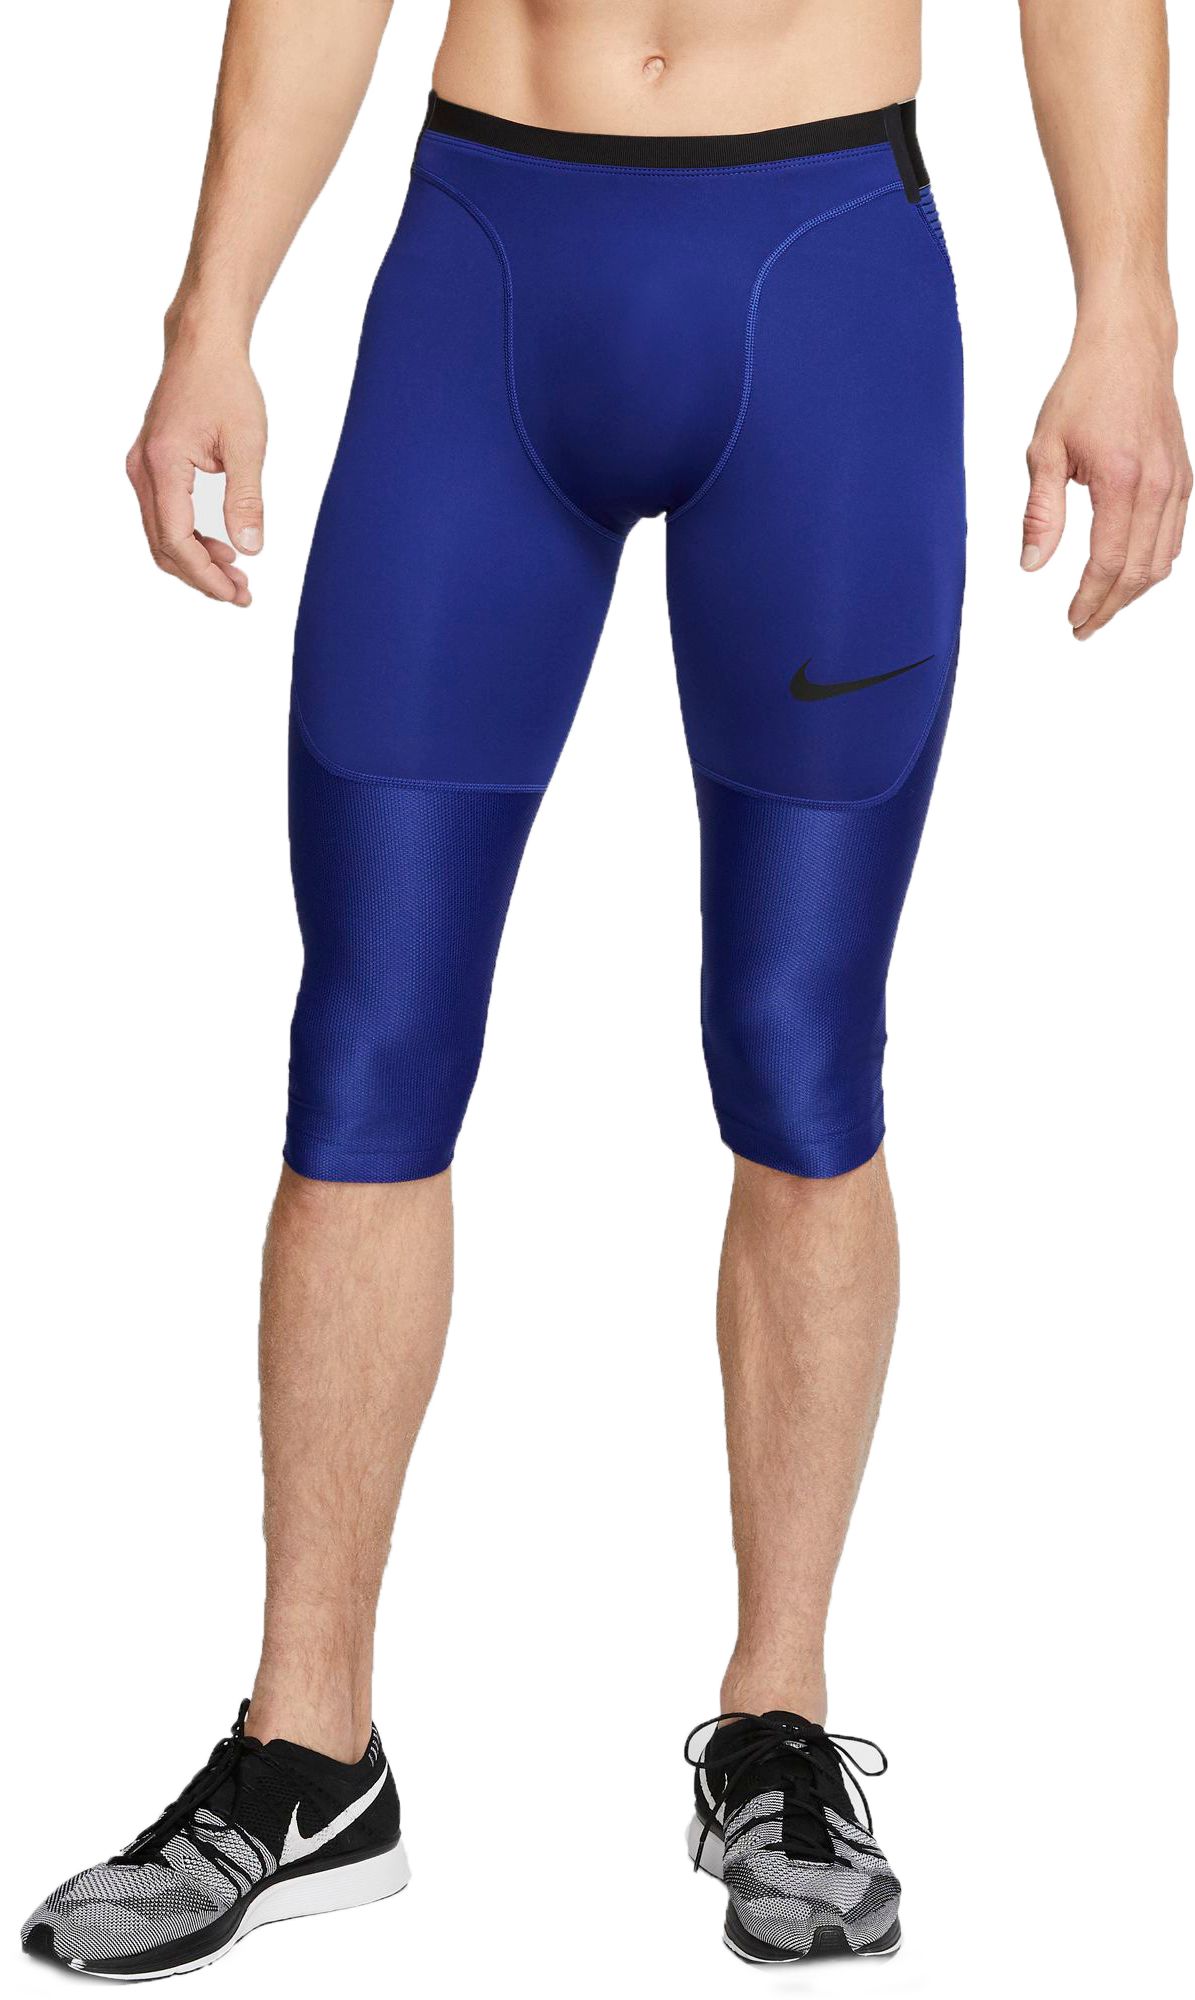 Nike Men's Pro AeroAdapt Shorts - .75